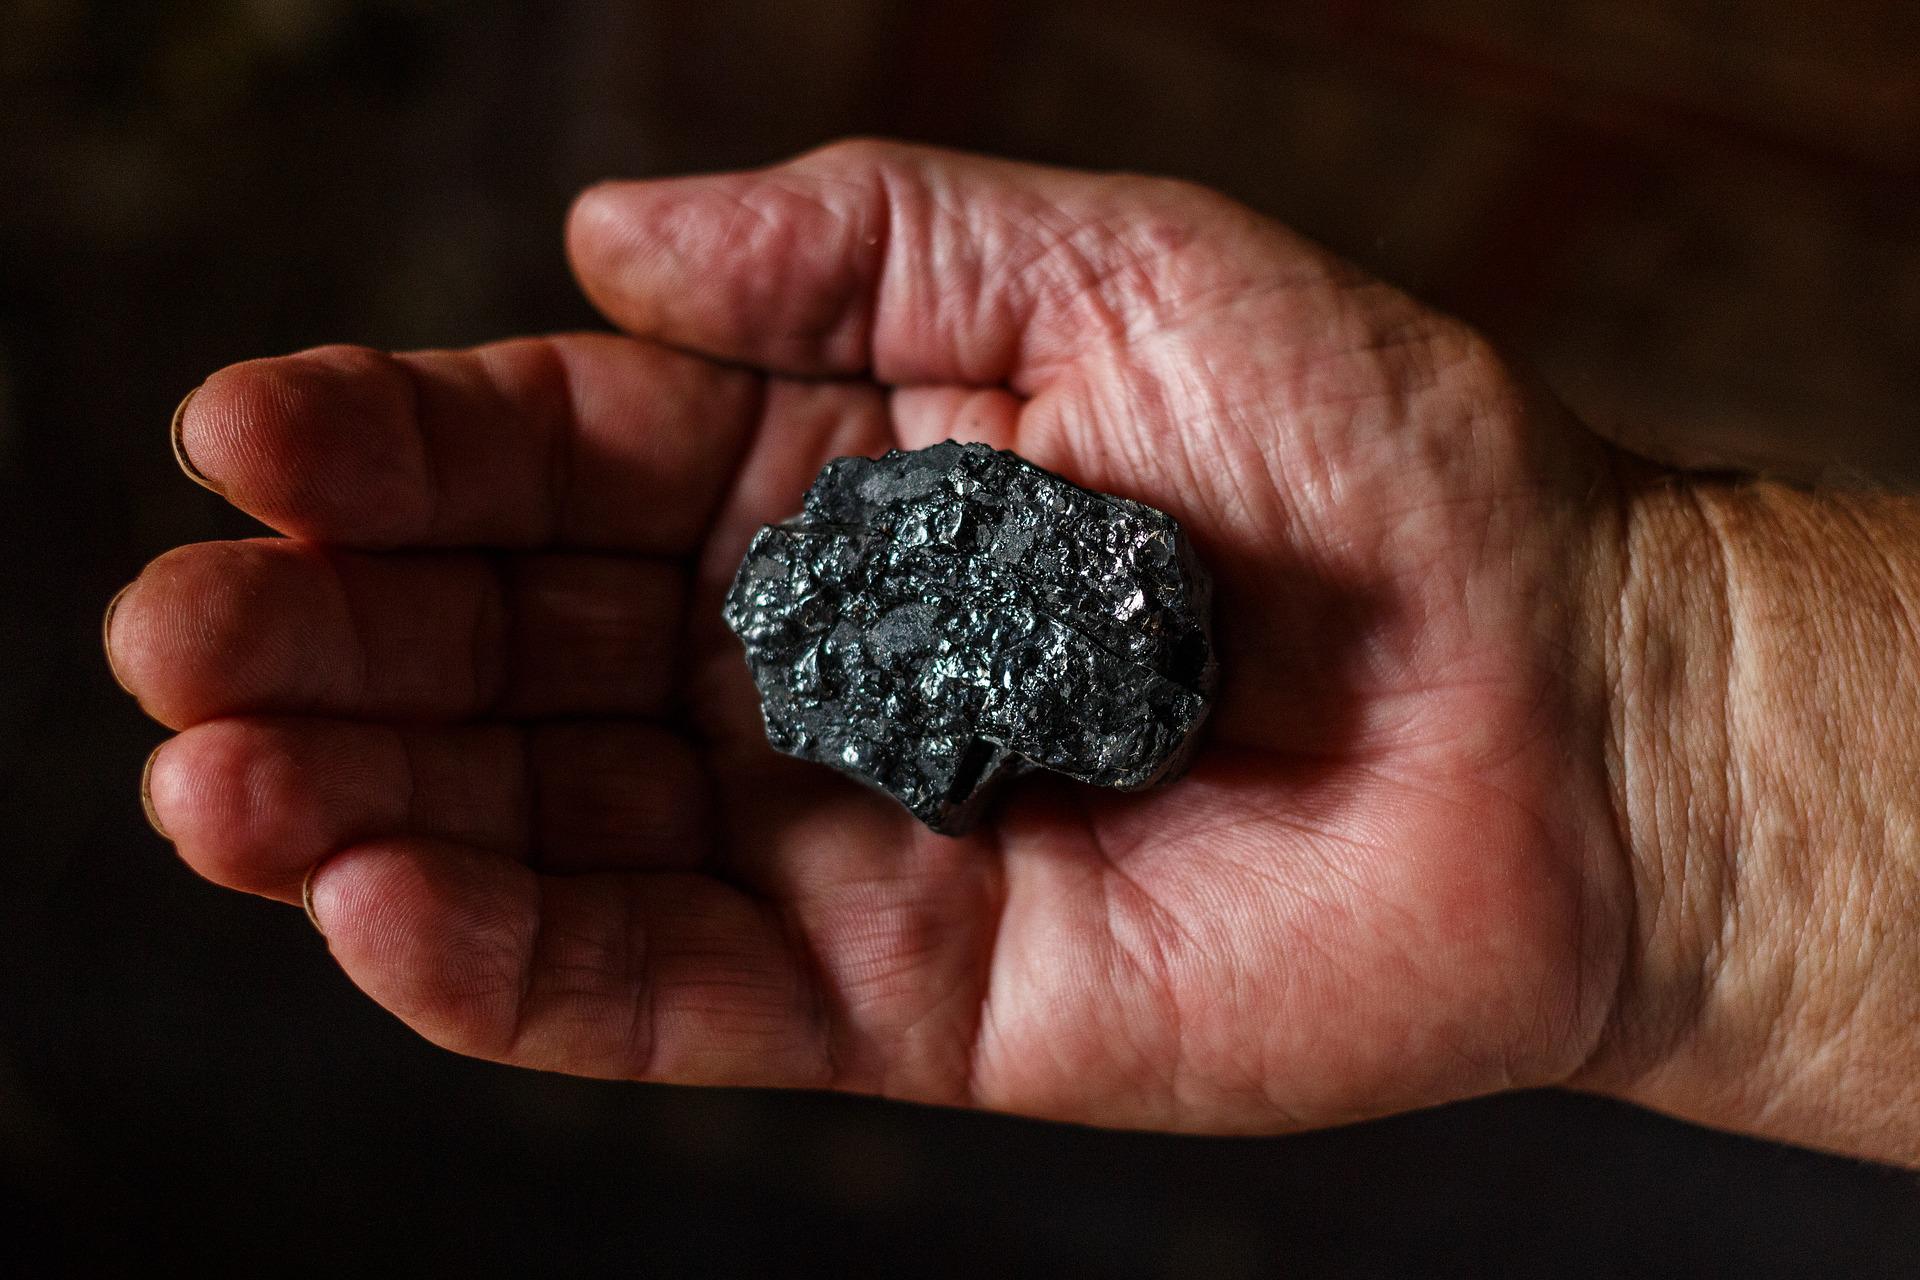 Mongolian PM: Stolen coal is worldwide problem 